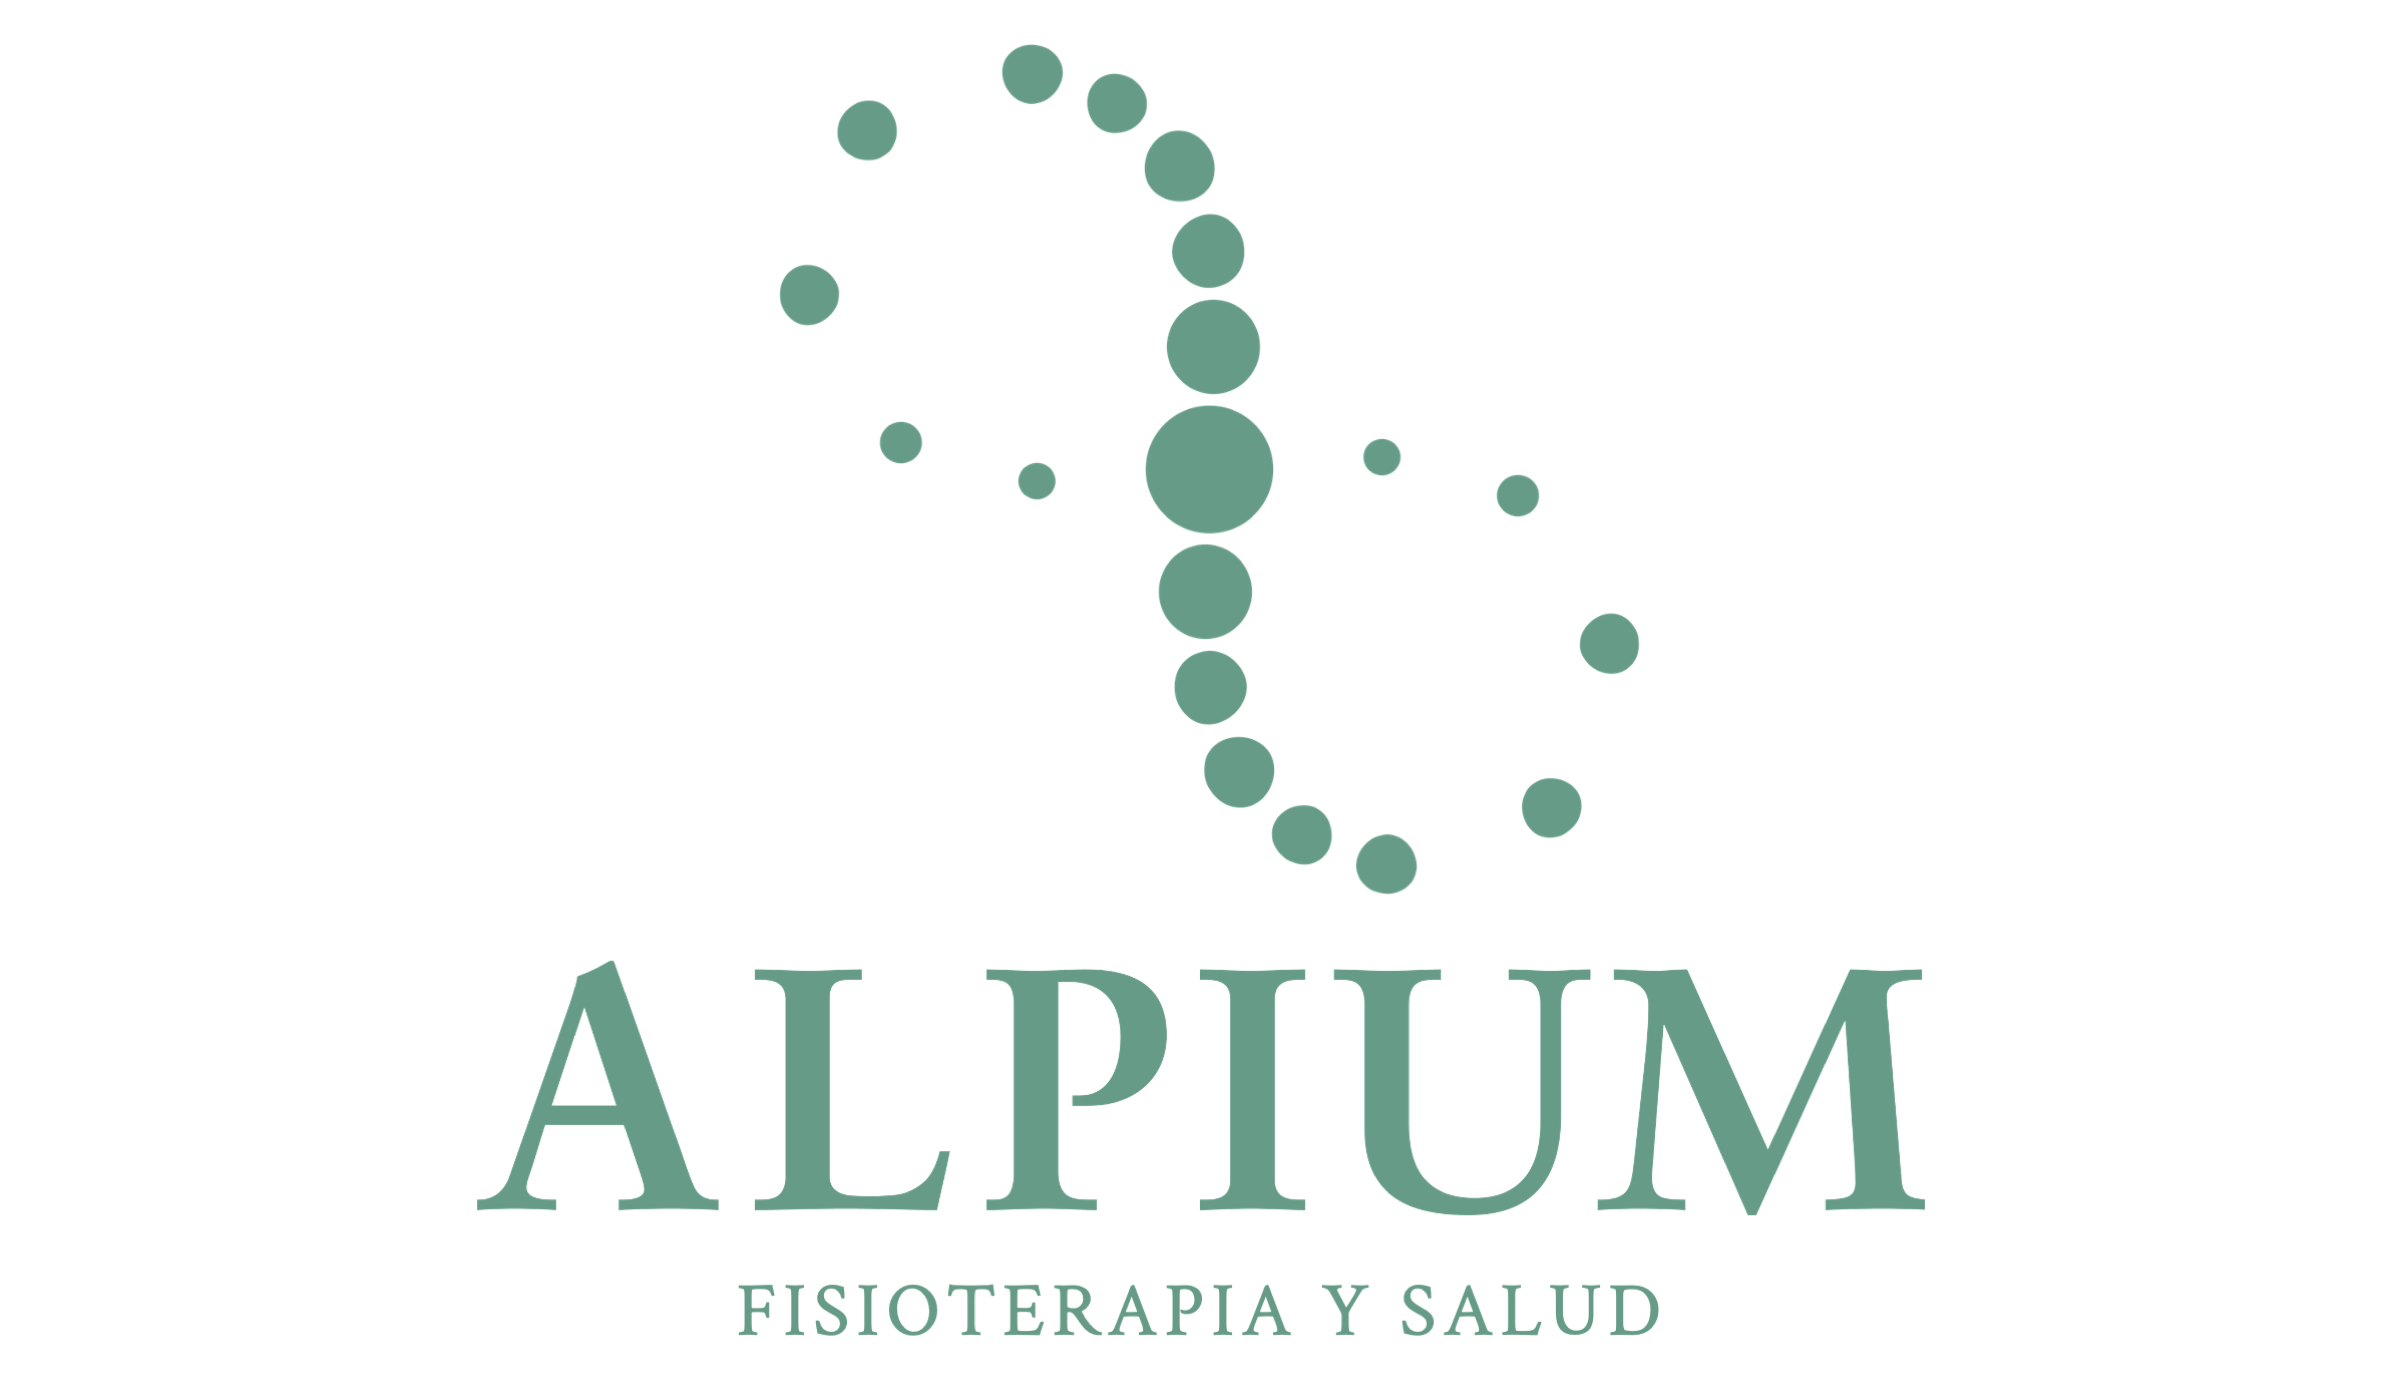 Clínica Alpium